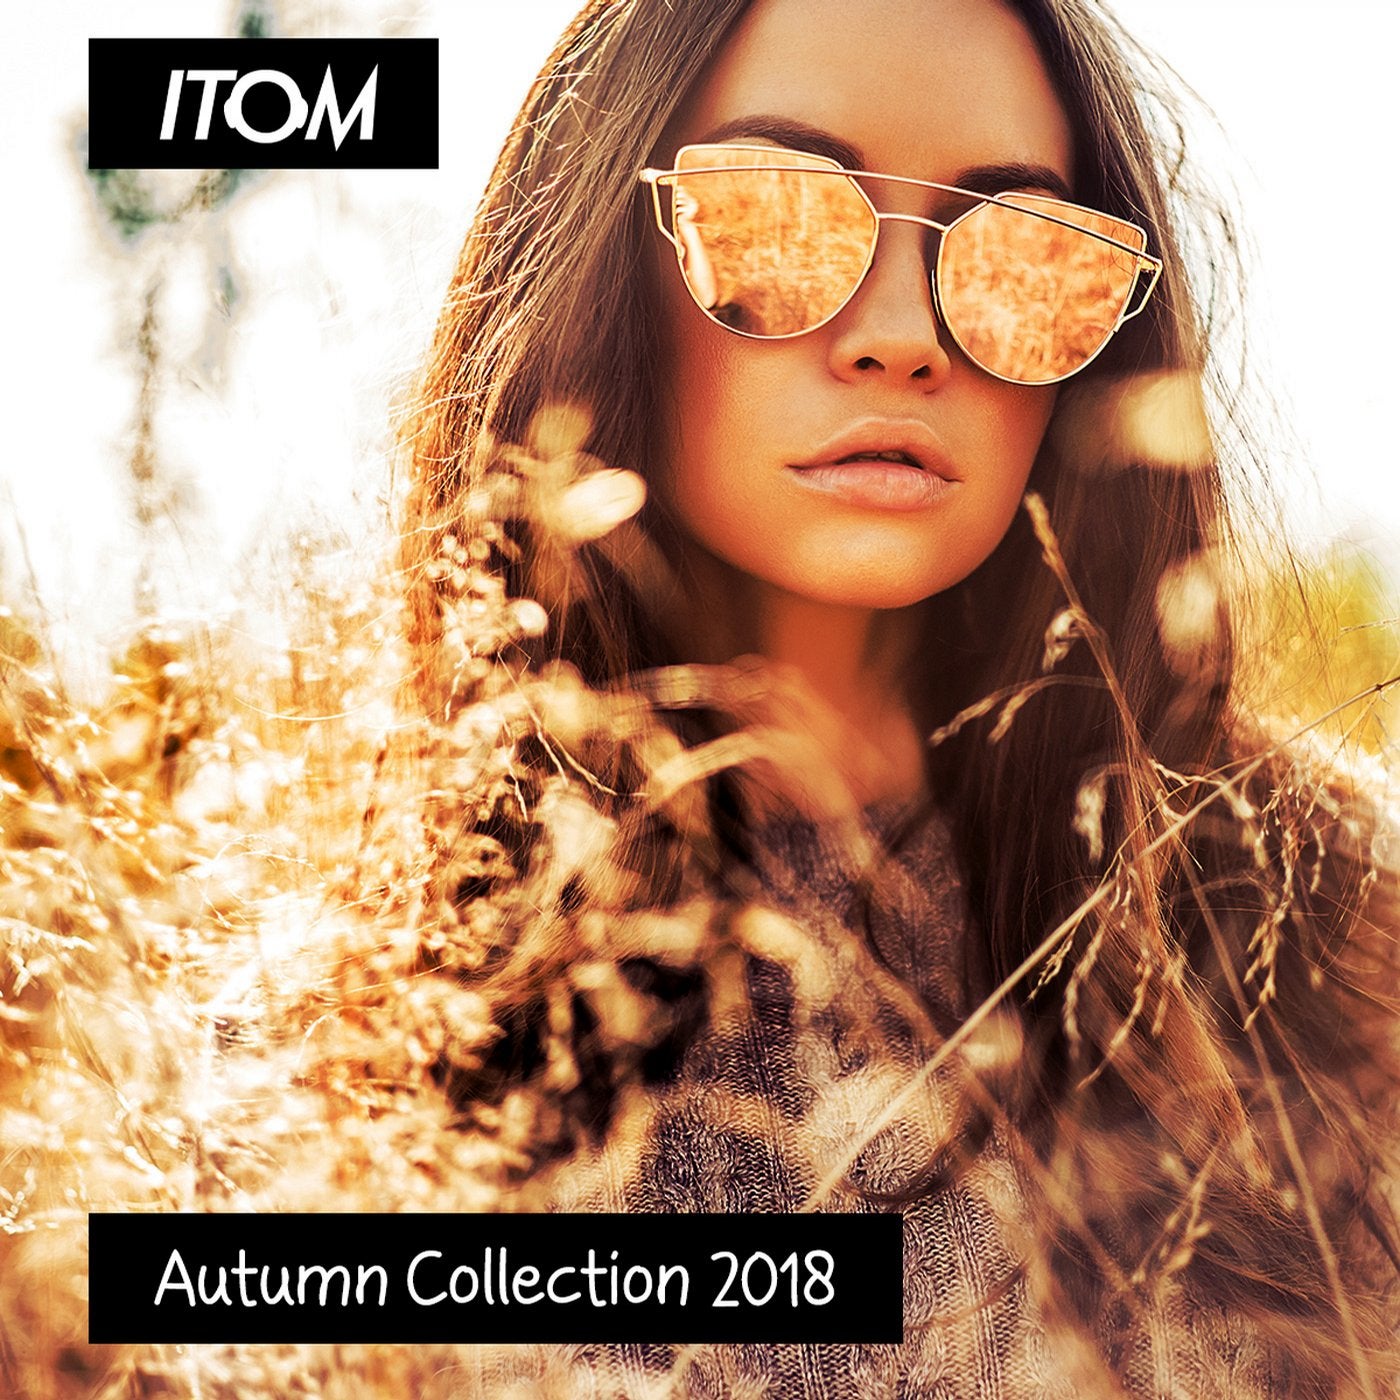 Autumn Collection 2018